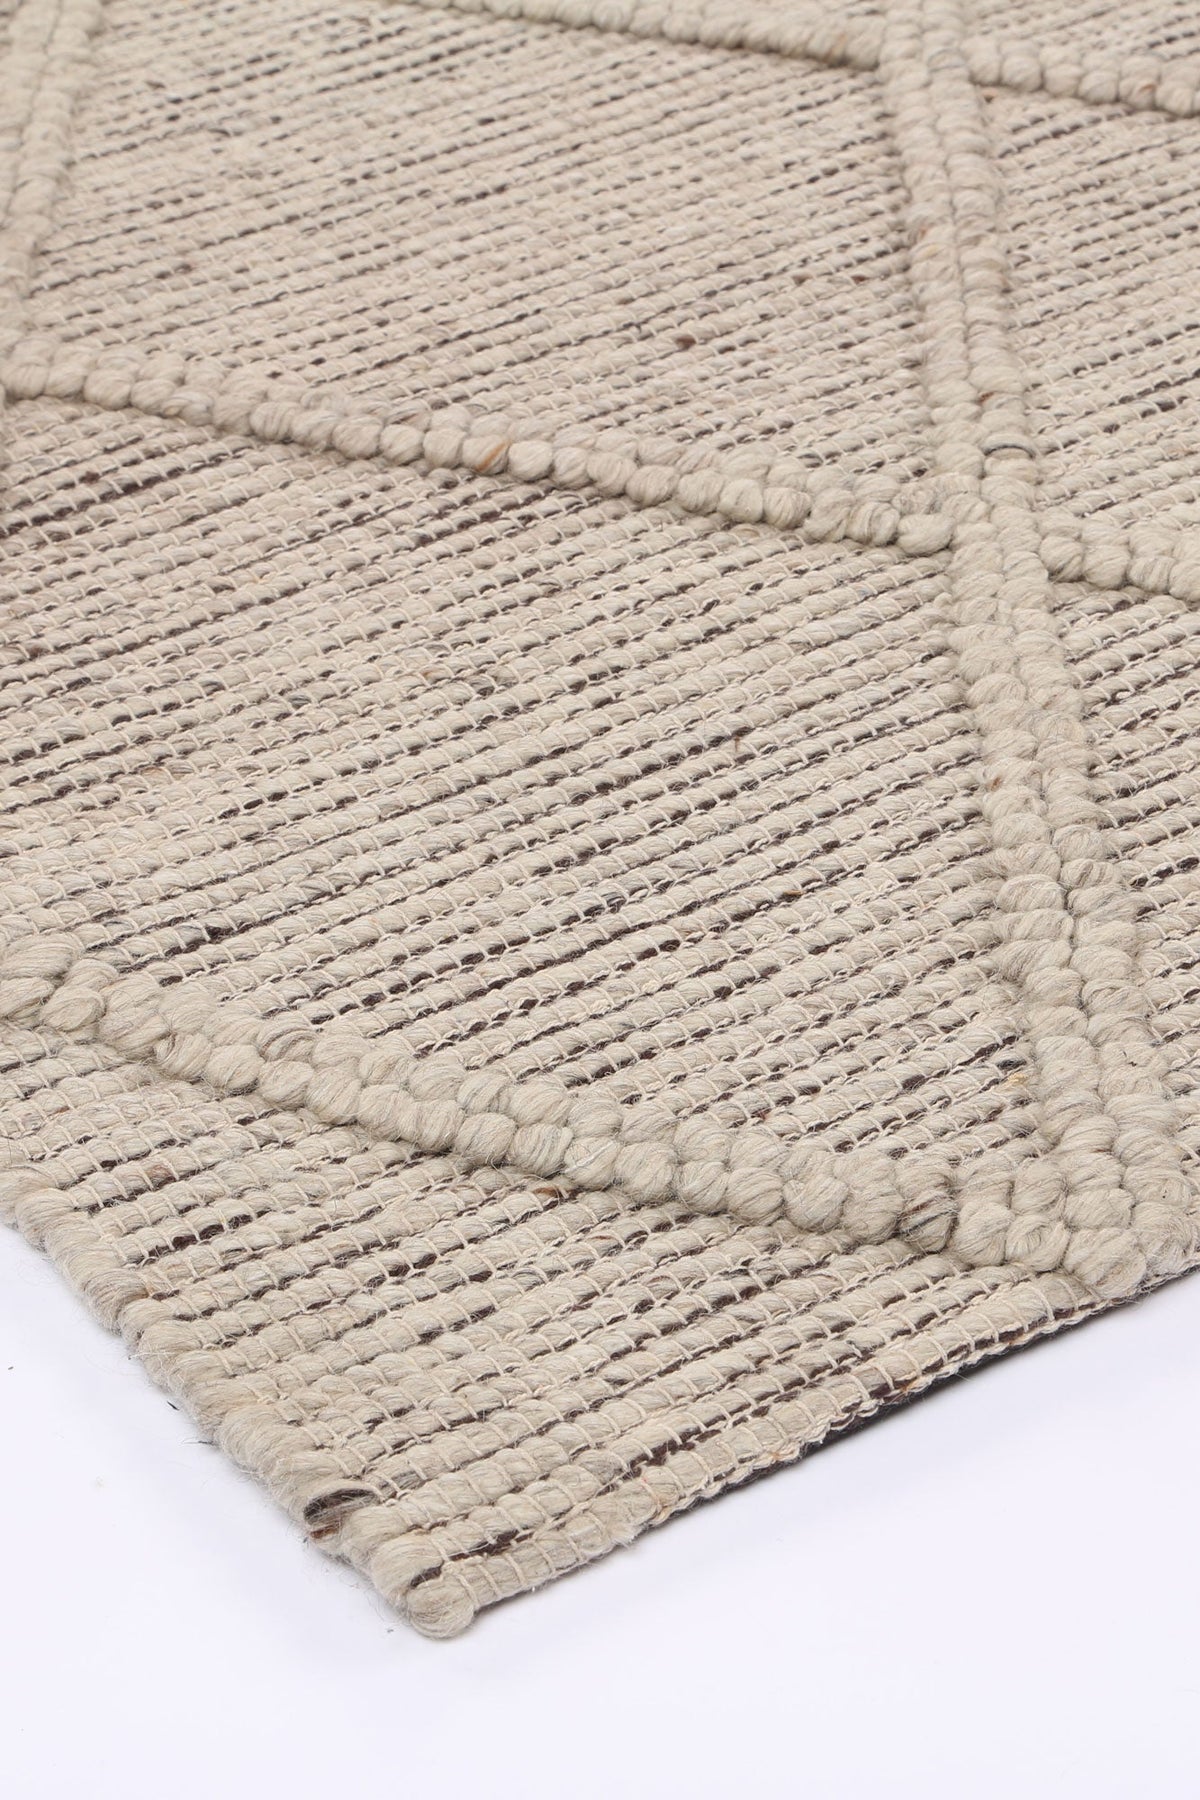 Eskandar Hand-tufted Moroccan Taupe Wool Rug